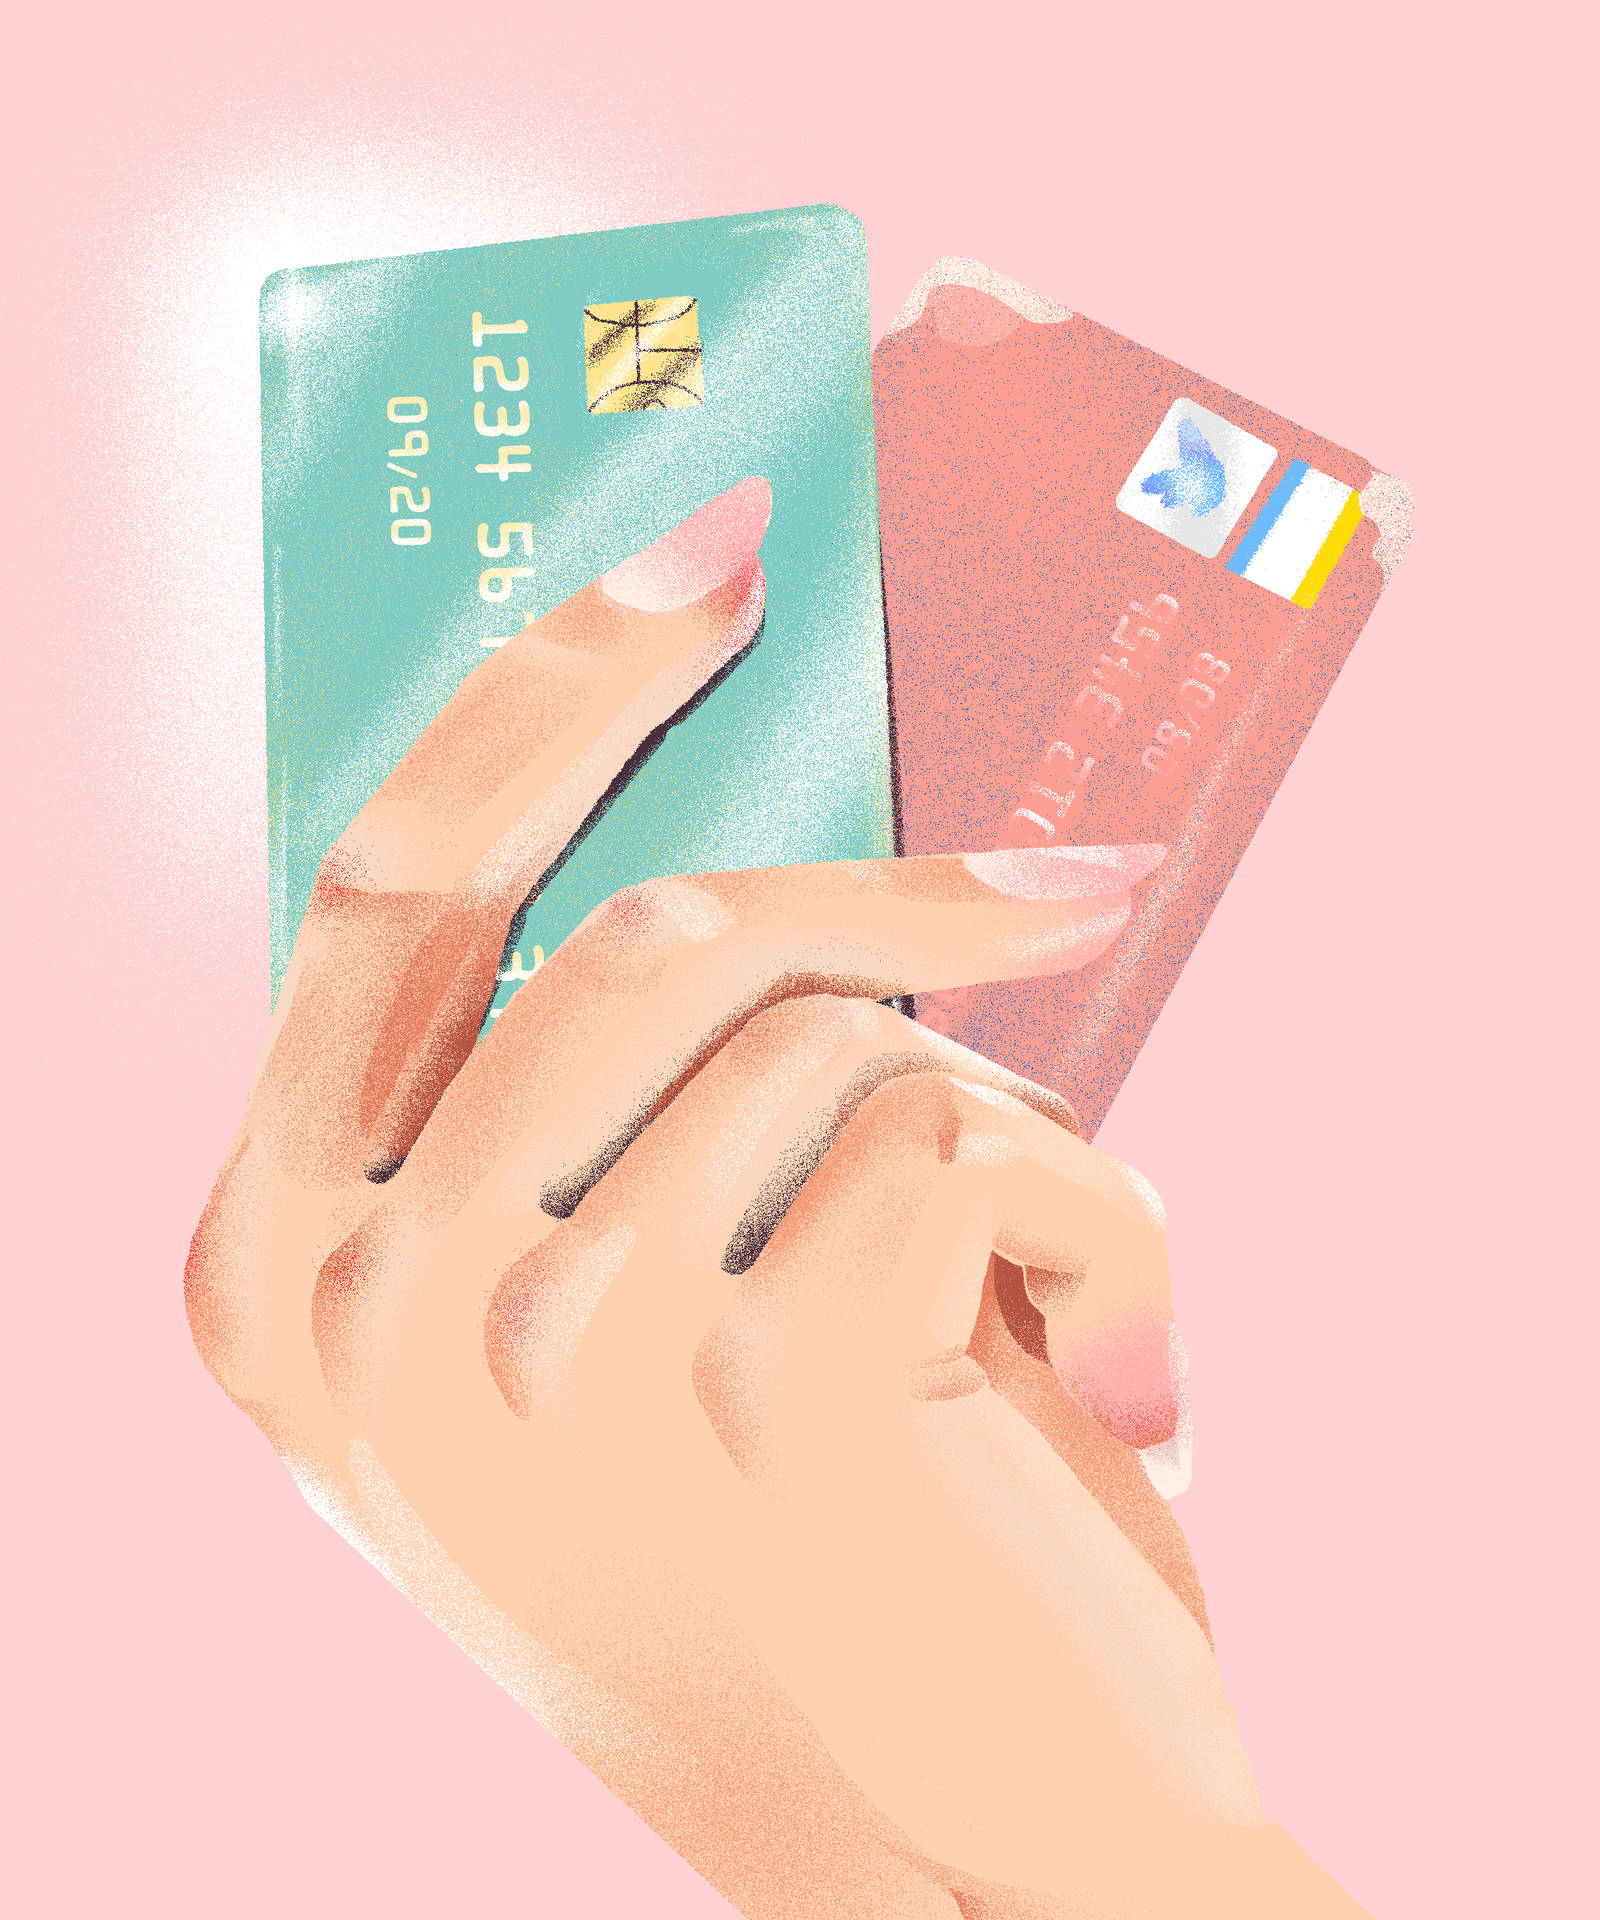 Digital Art of Teal and Pink Credit Cards Wallpaper